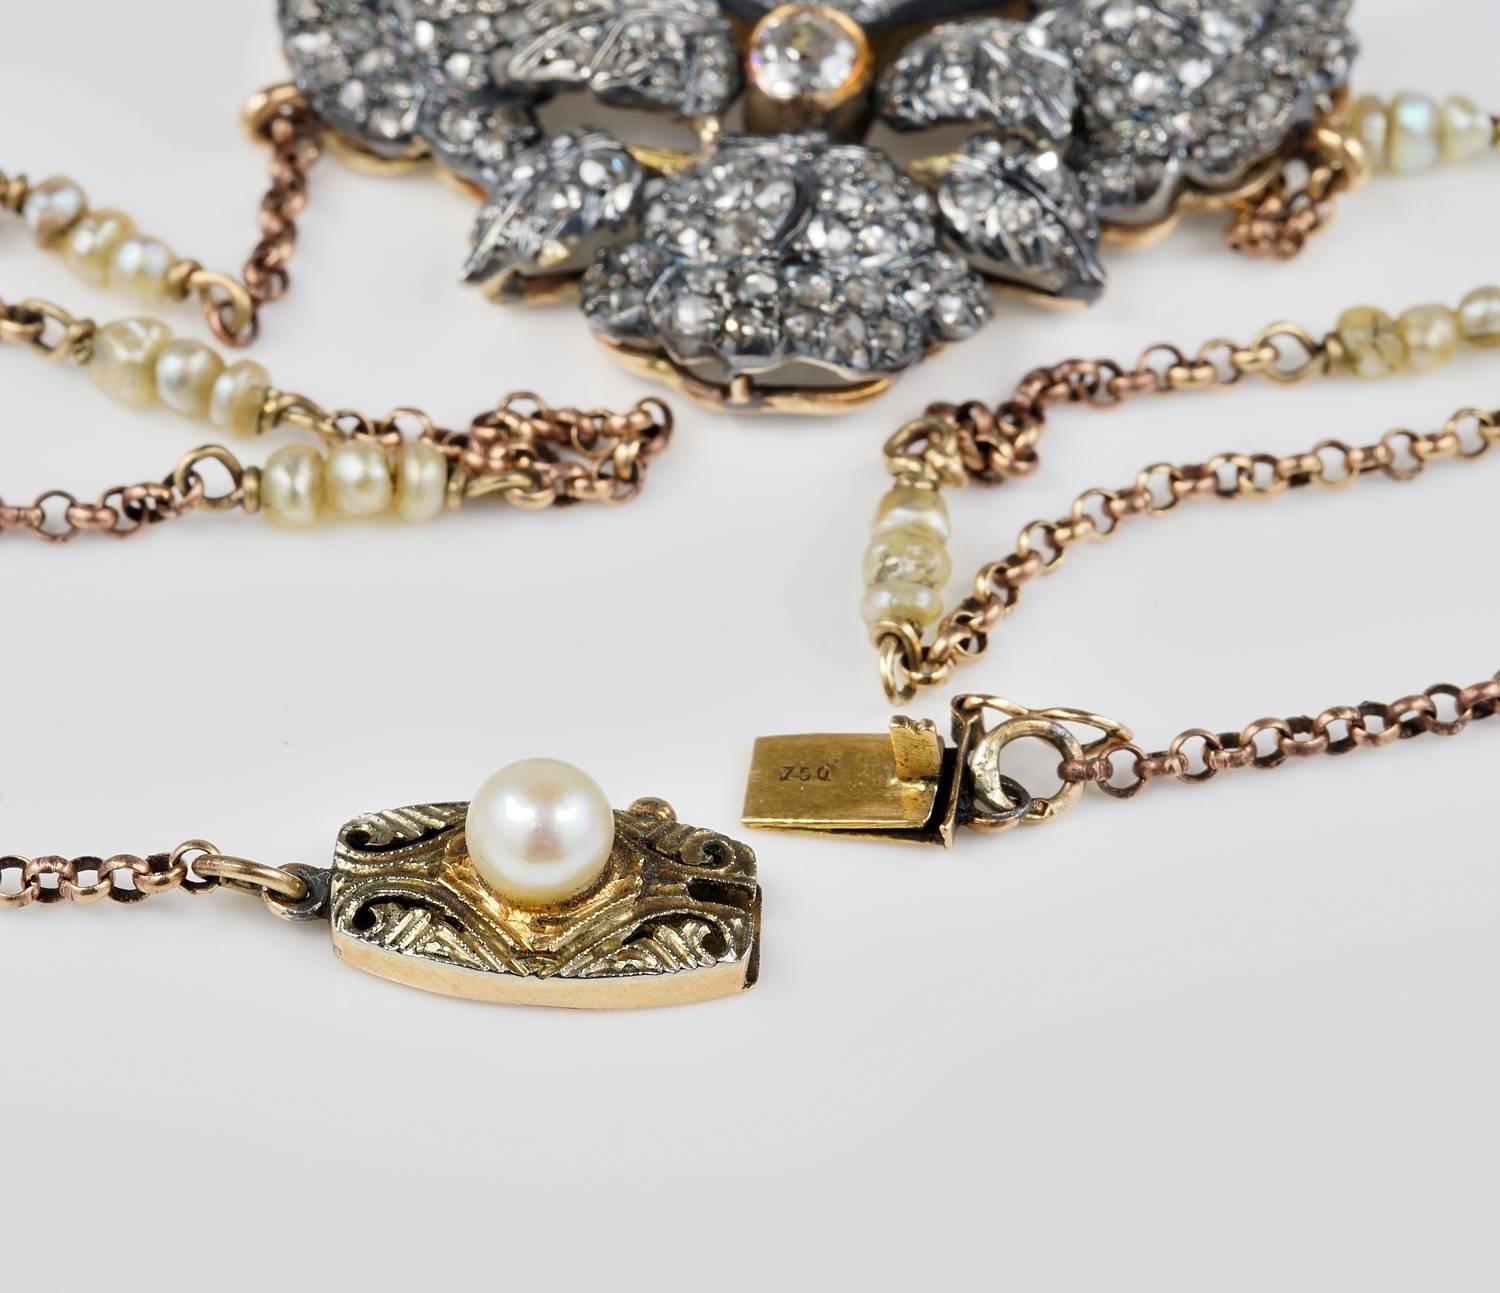 Antique Cushion Cut Antique Miniature Diamond Rare Huge Natural Basra Pearl Necklace For Sale